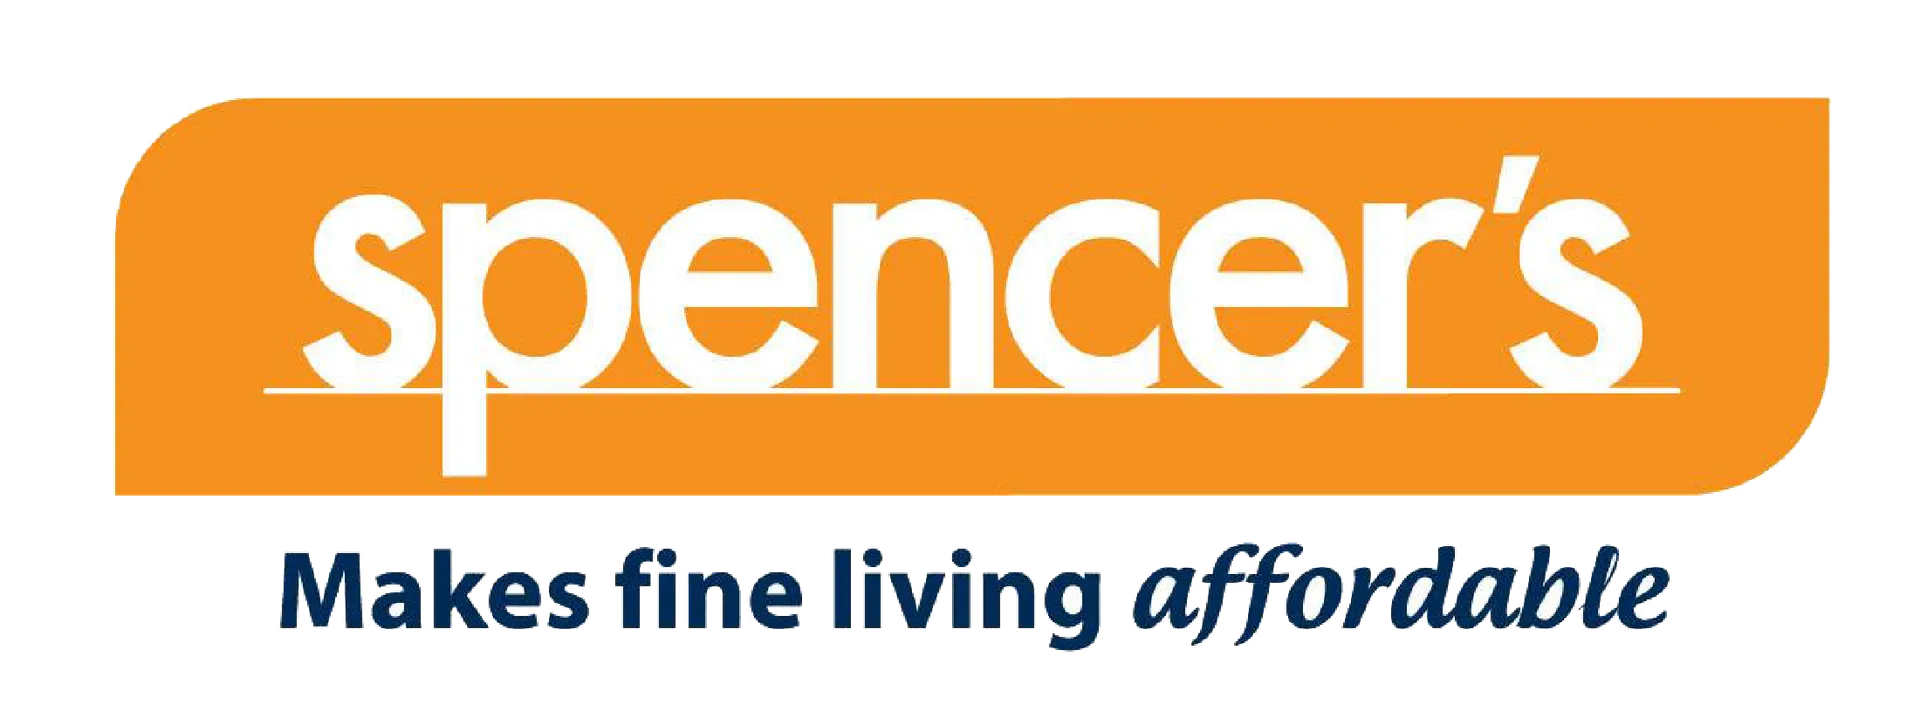 SPENCER'S RETAIL logo. Current catalogue